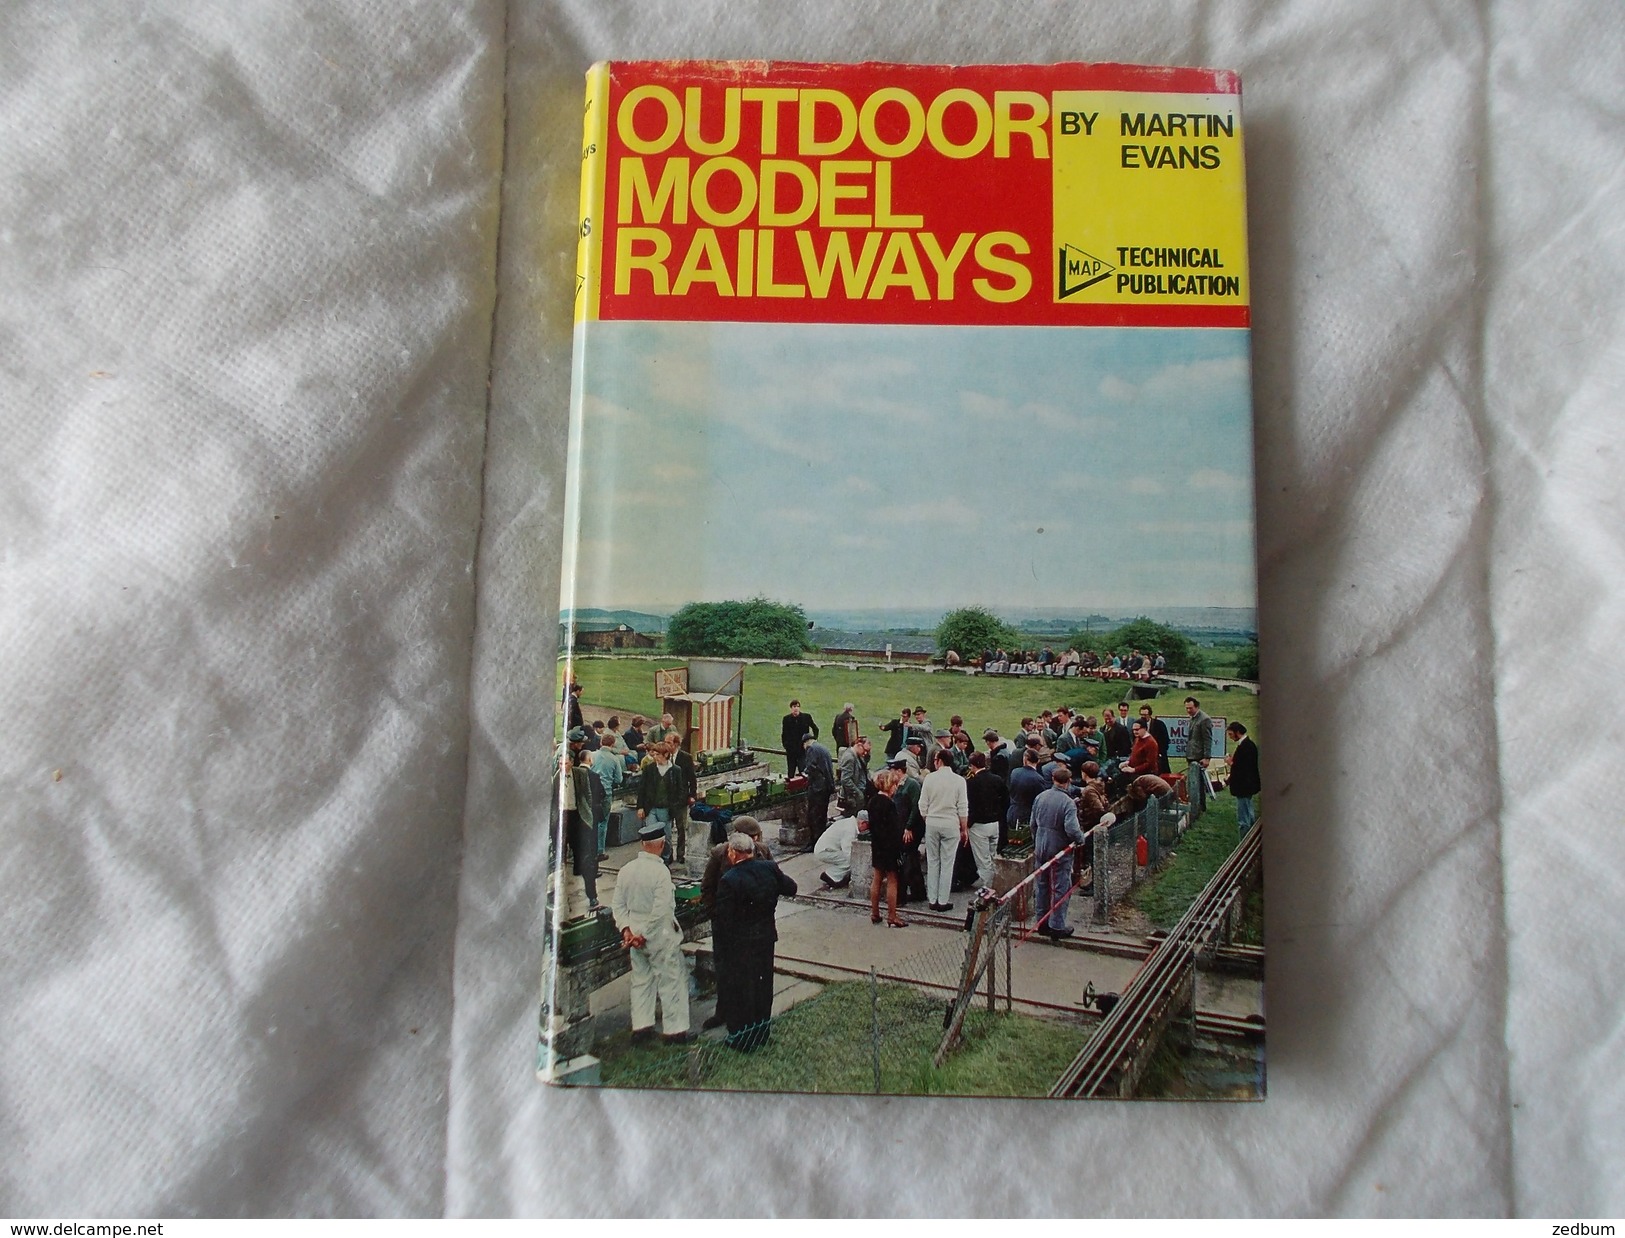 Outdoor Model Railways By Martin Evans - Libri Sulle Collezioni